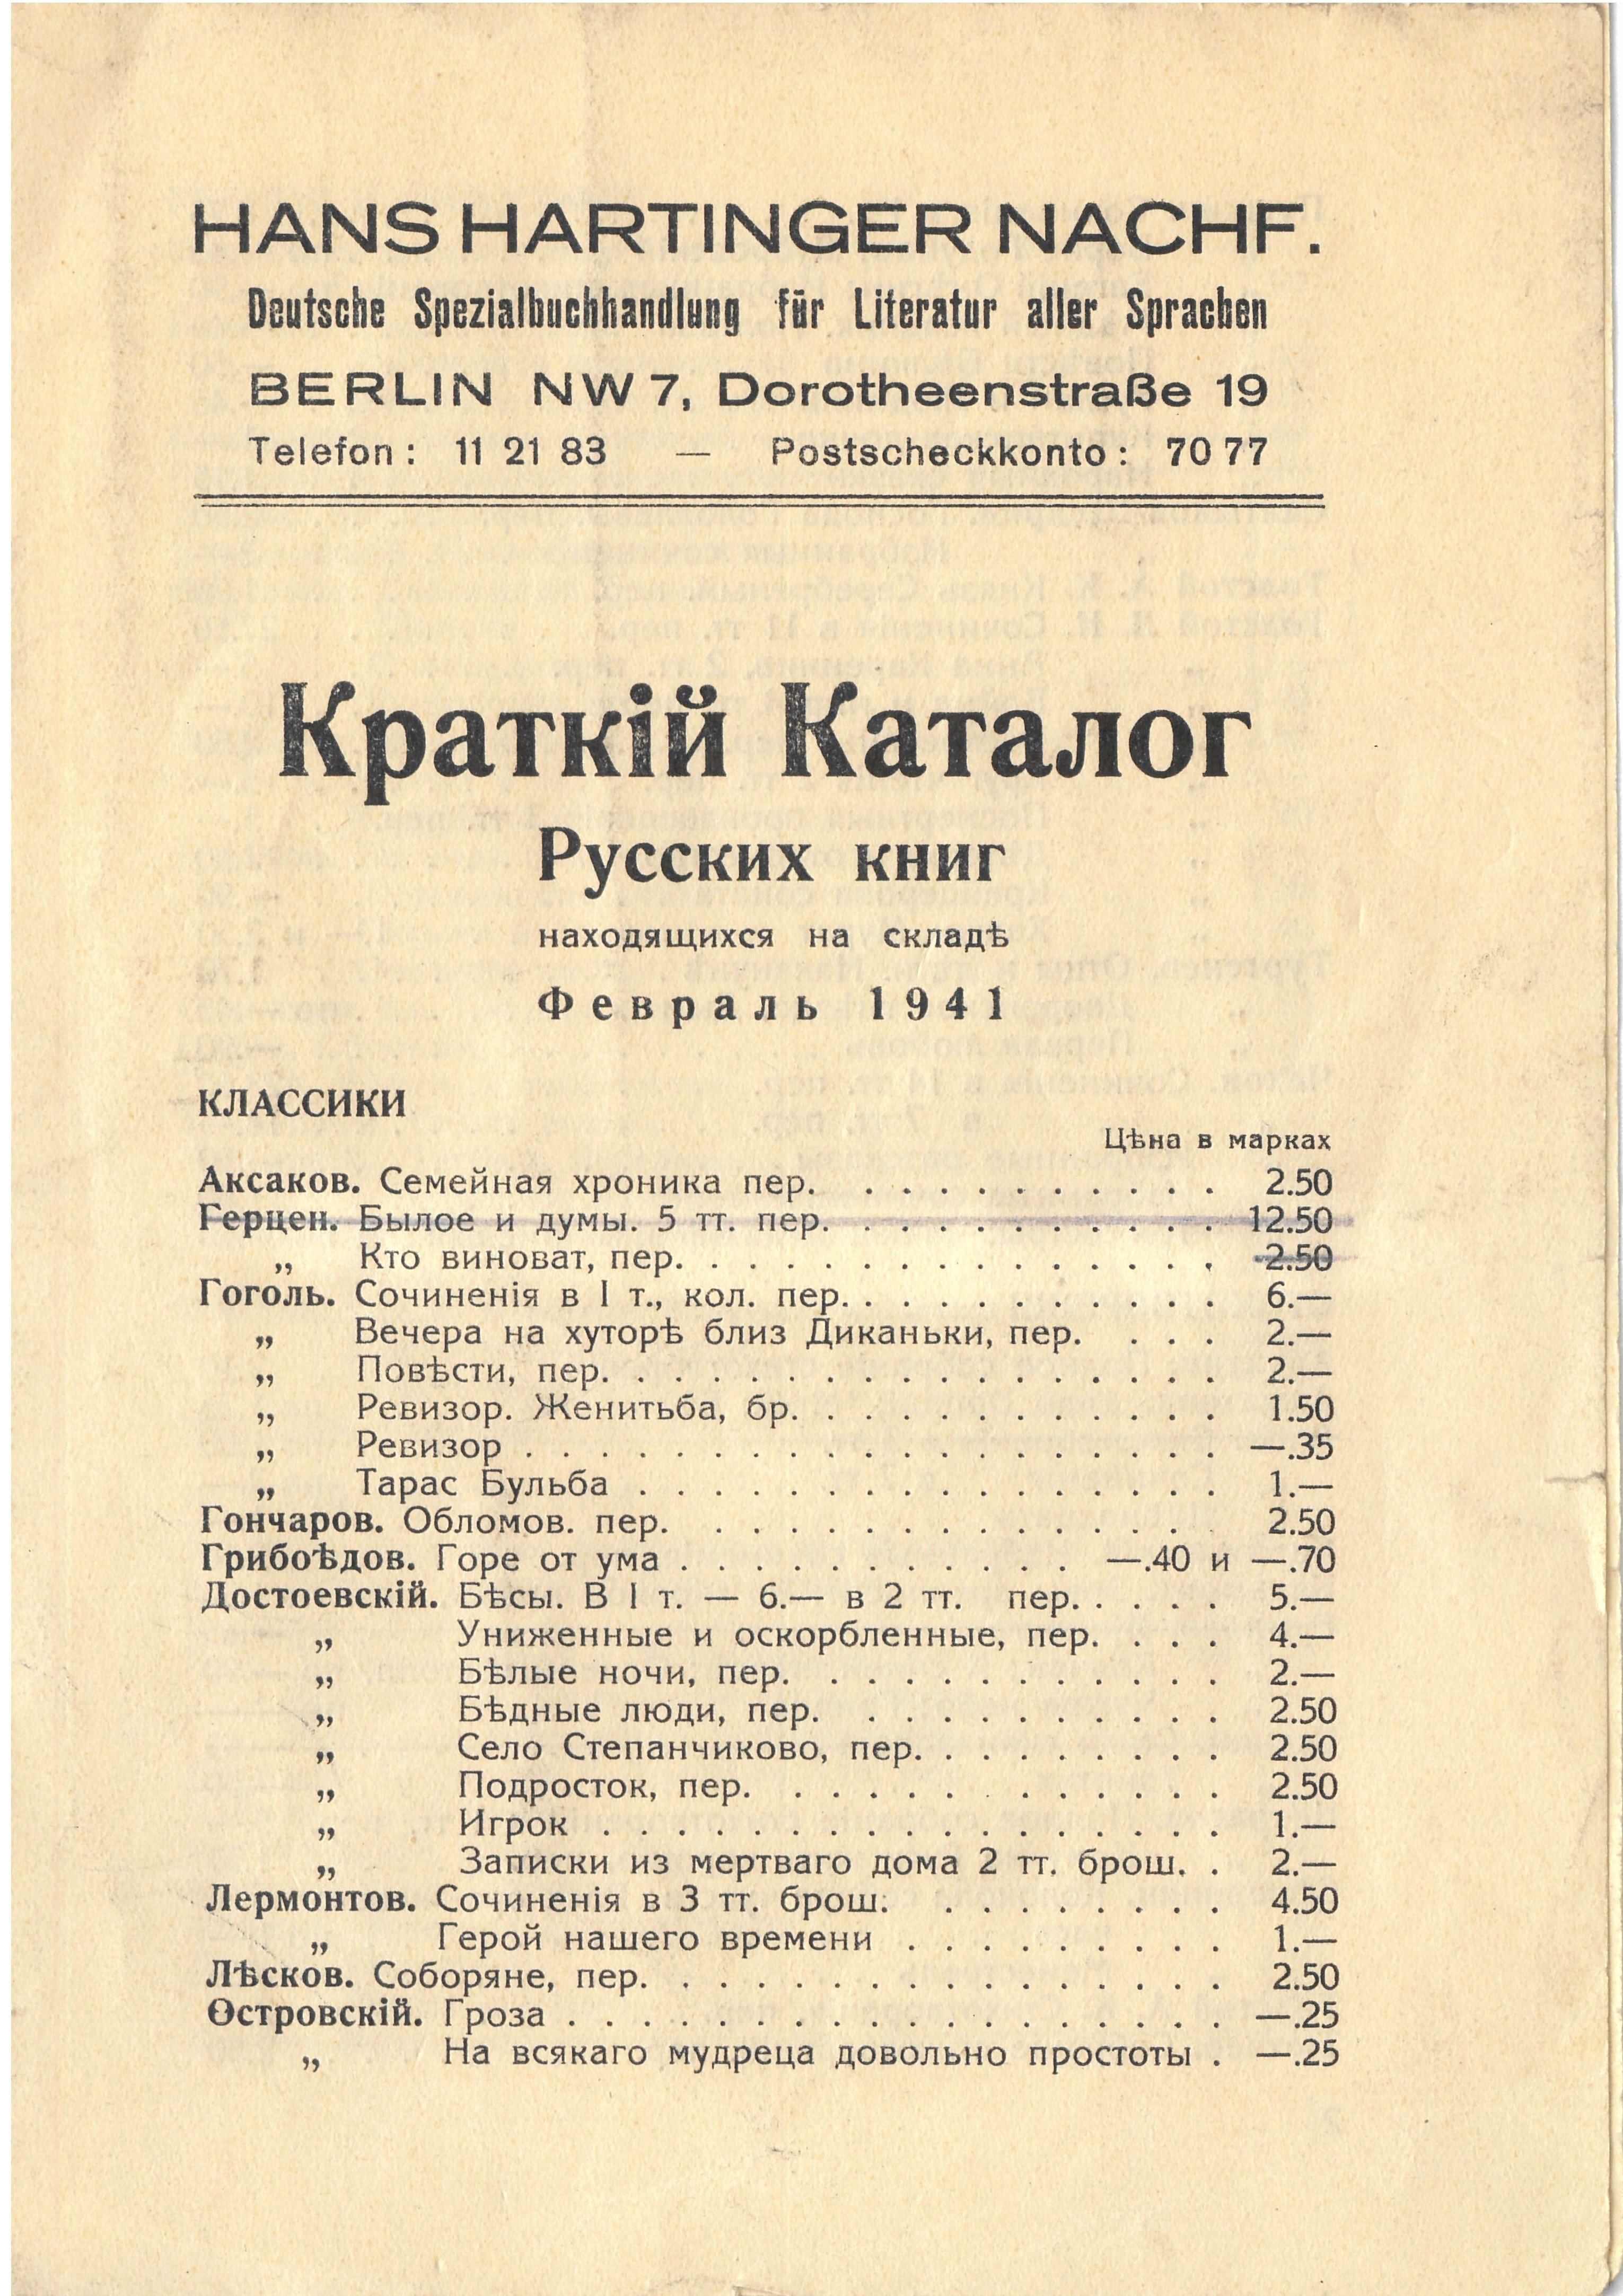 Kurzer Katalog russischer Bücher, Berlin, 1941 (Deutsch-Russisches Museum Berlin-Karlshorst CC BY-NC-SA)